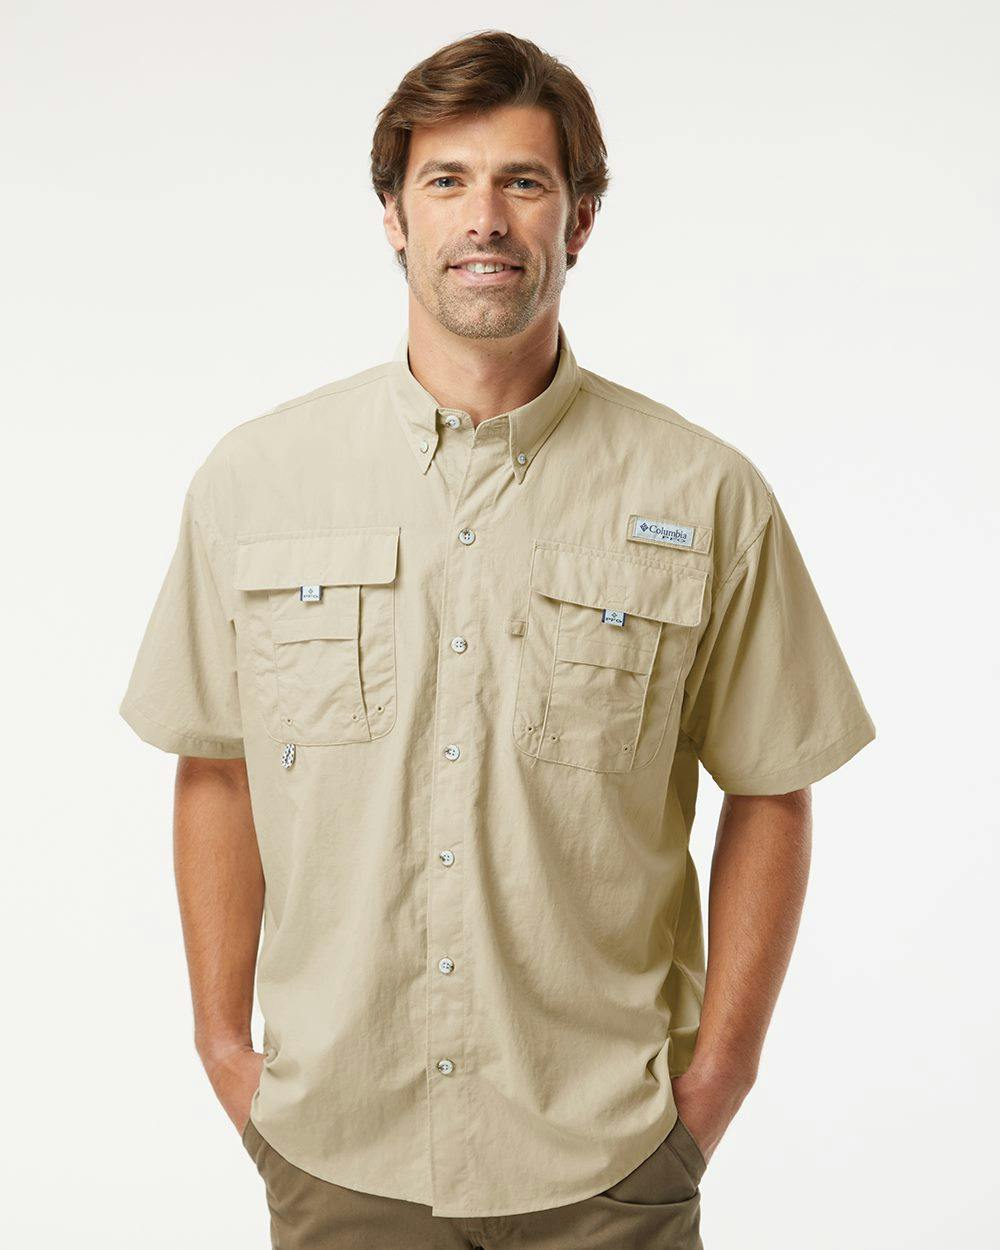 Image for PFG Bahama™ II Short Sleeve Shirt - 101165